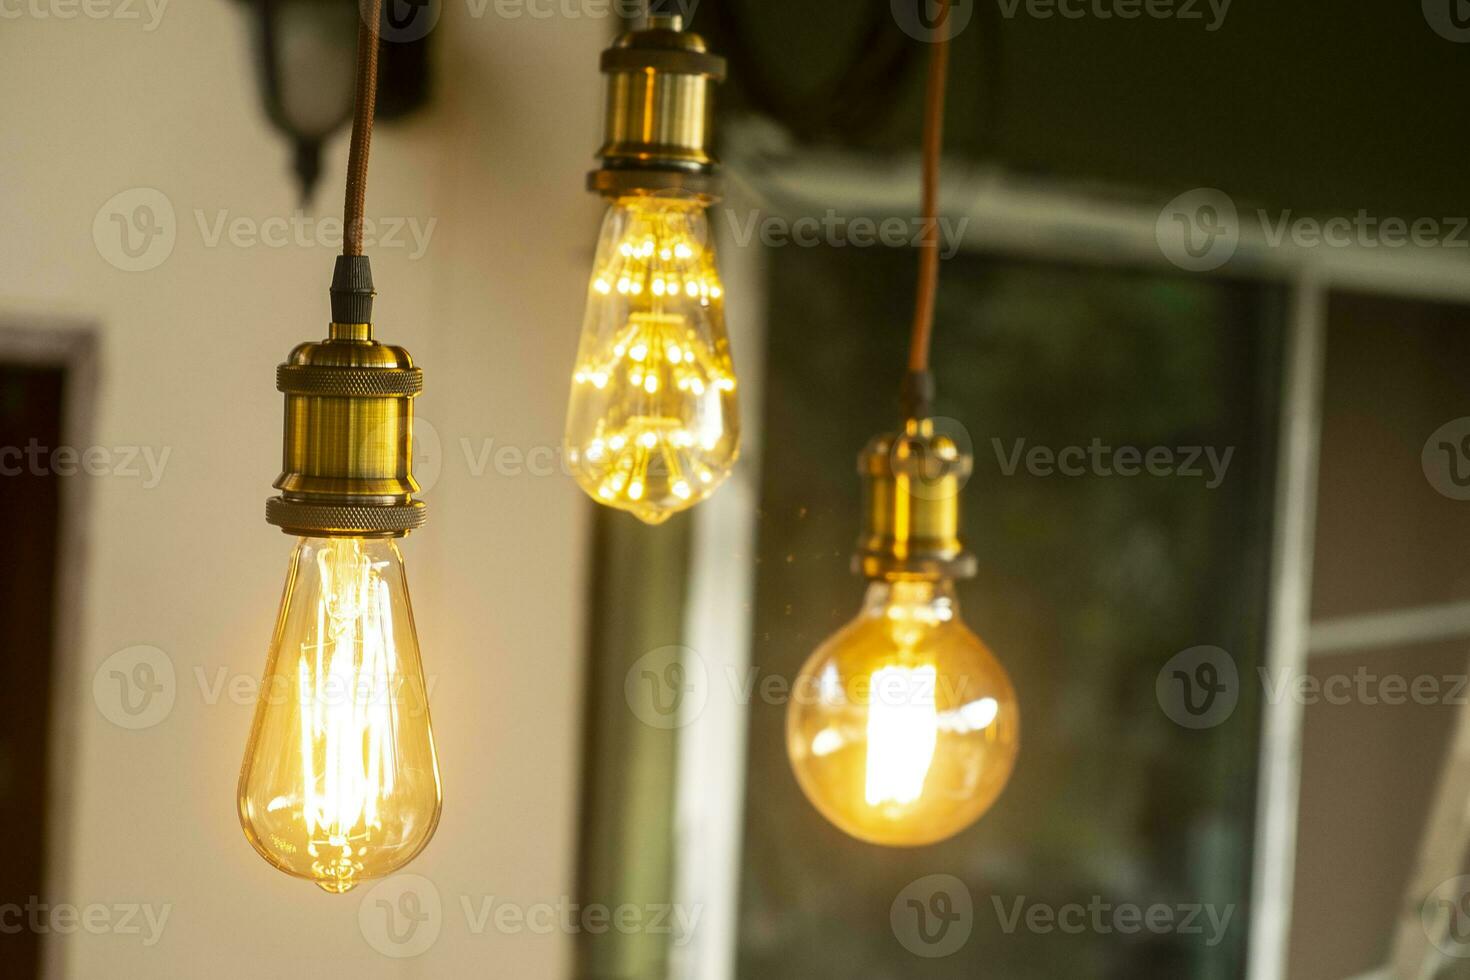 lâmpada elétrica retro clássica led incandescente no fundo desfocado foto